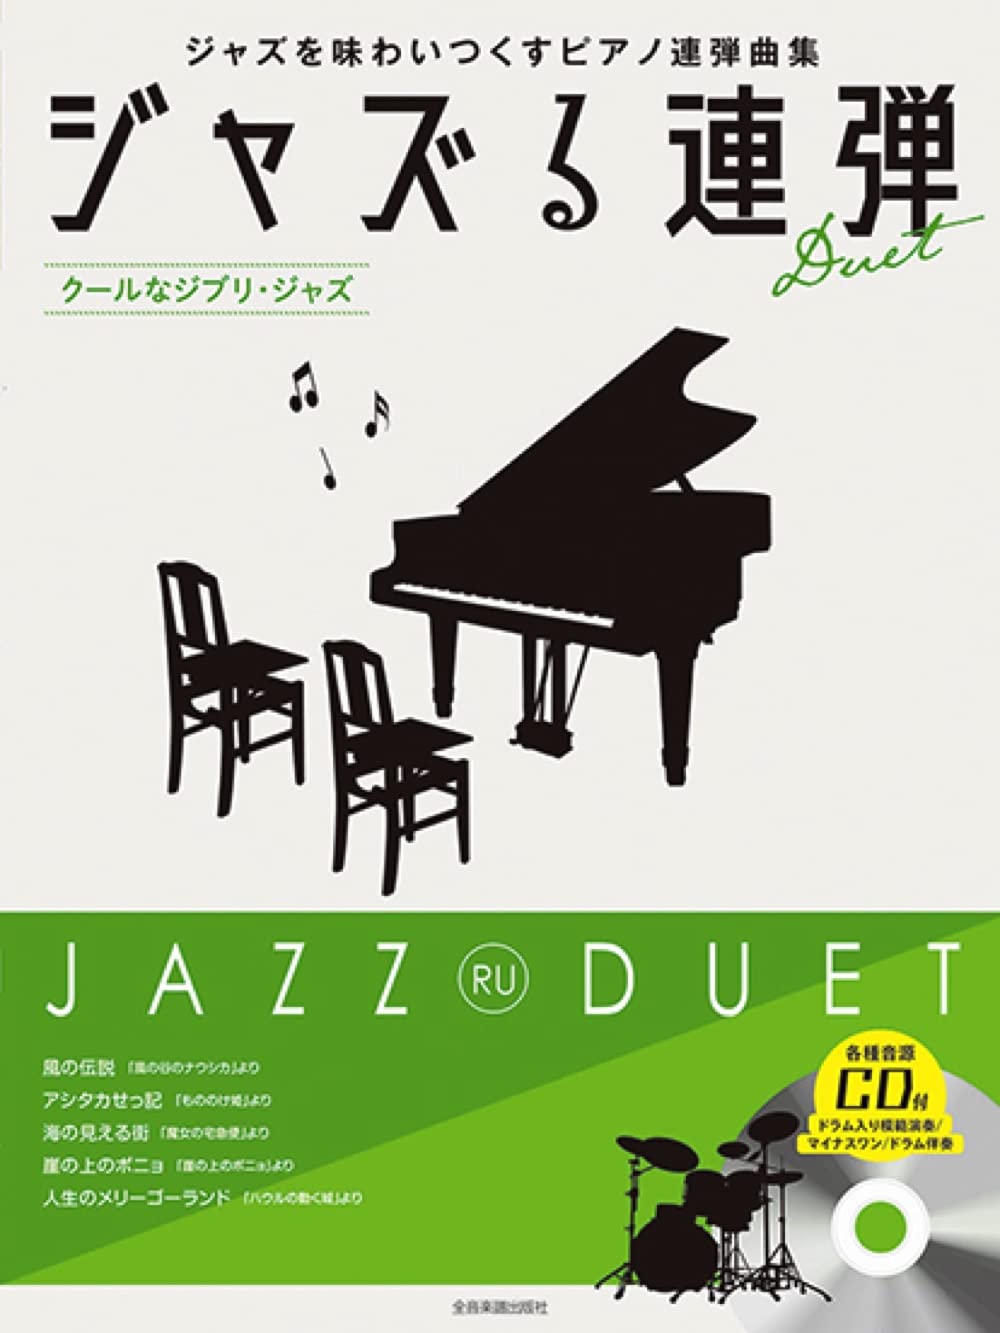 JAZZ RU PIANO DUET - Studio Ghibli Jazz arrangement w/CD(Demo Performance)